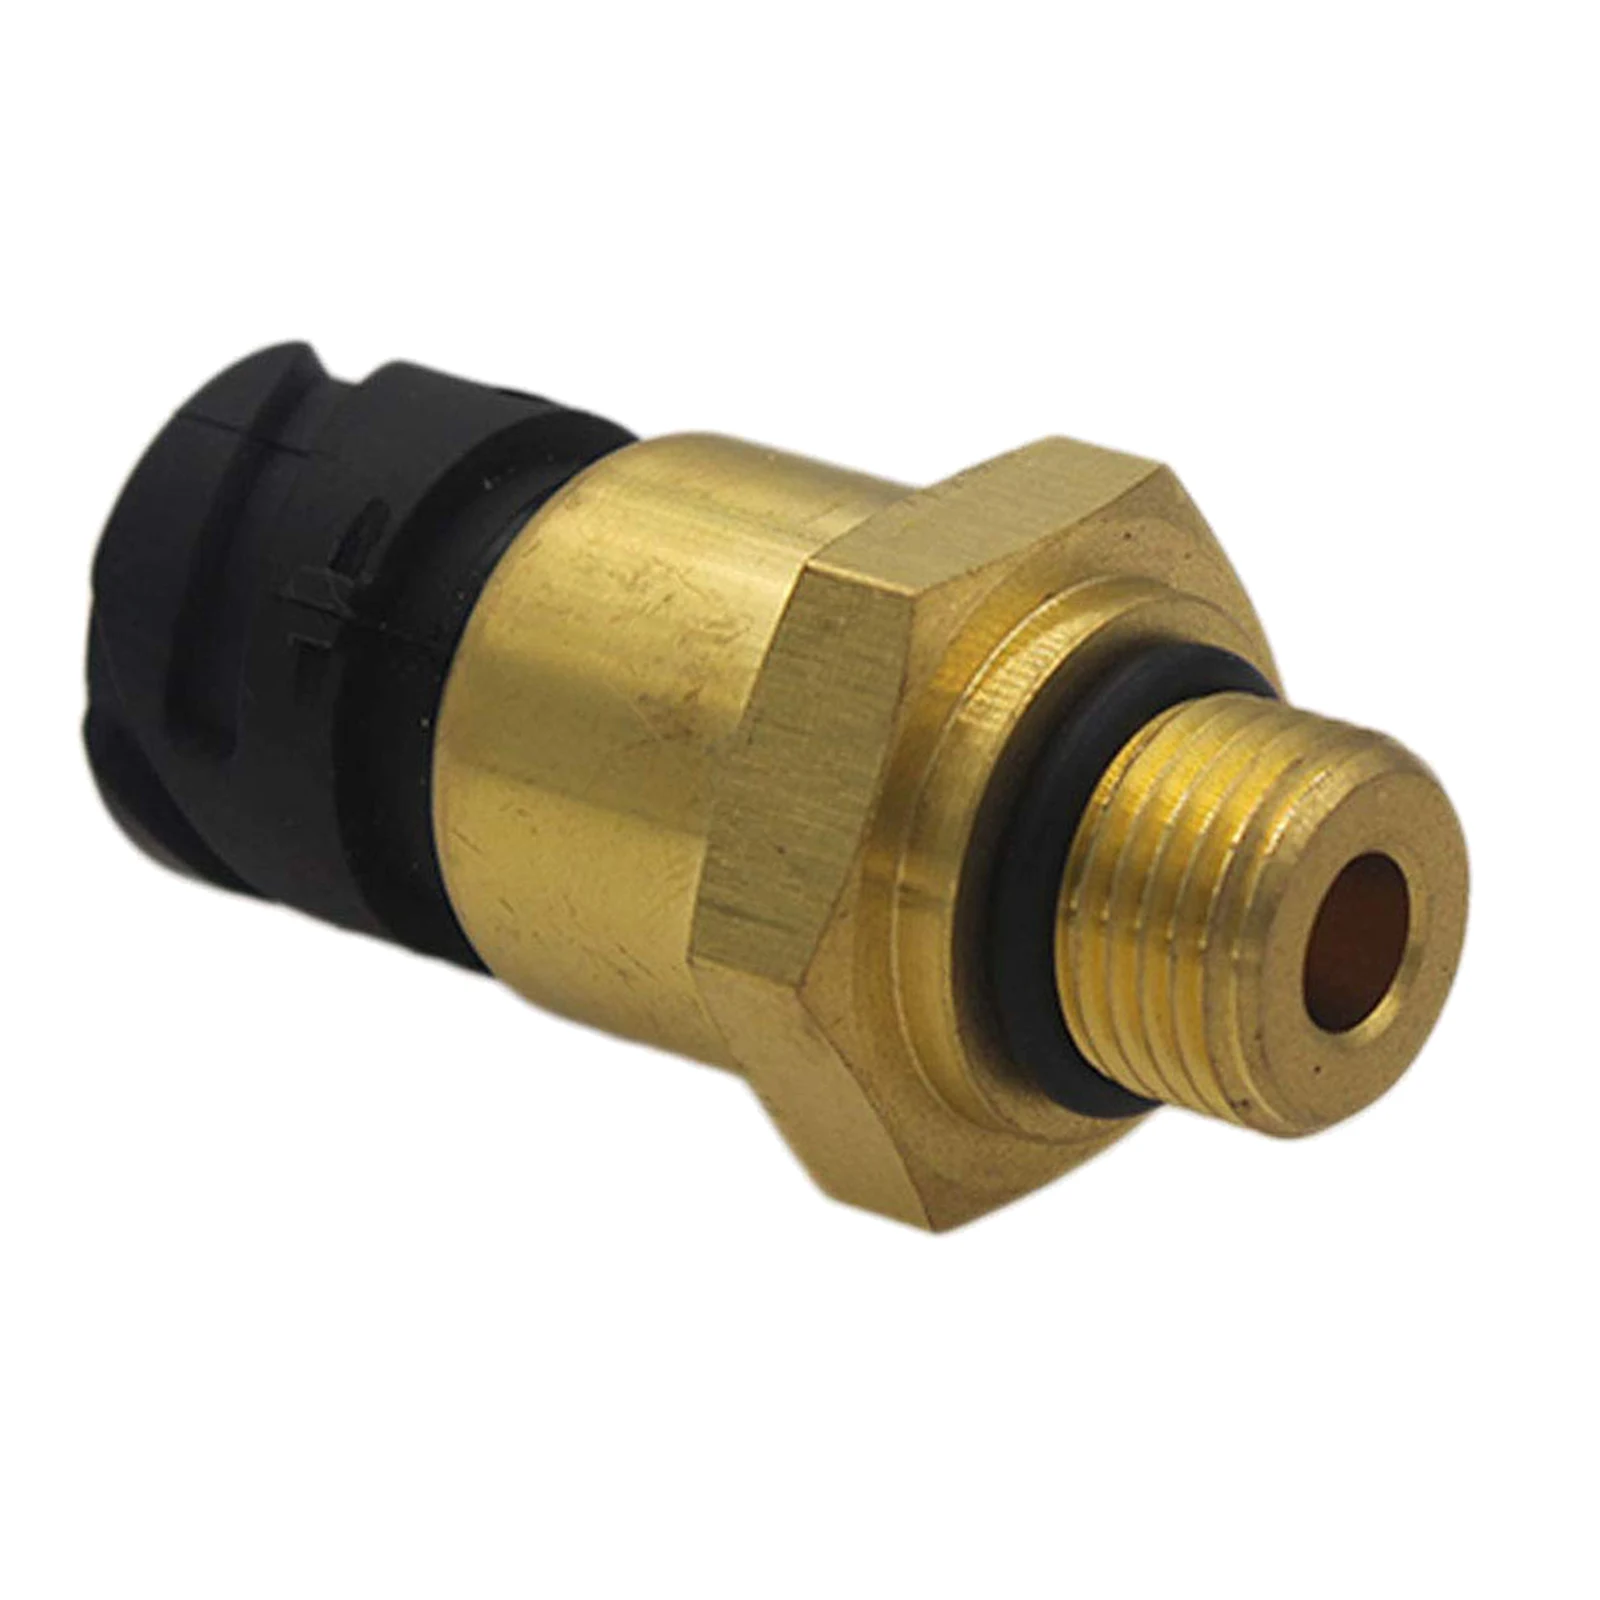 Automotive Oil Pressure Sensor Parts 20484676 00420796744 7421746206 Replacement Engine Crankcase Pressure Switch Fit for Volvo